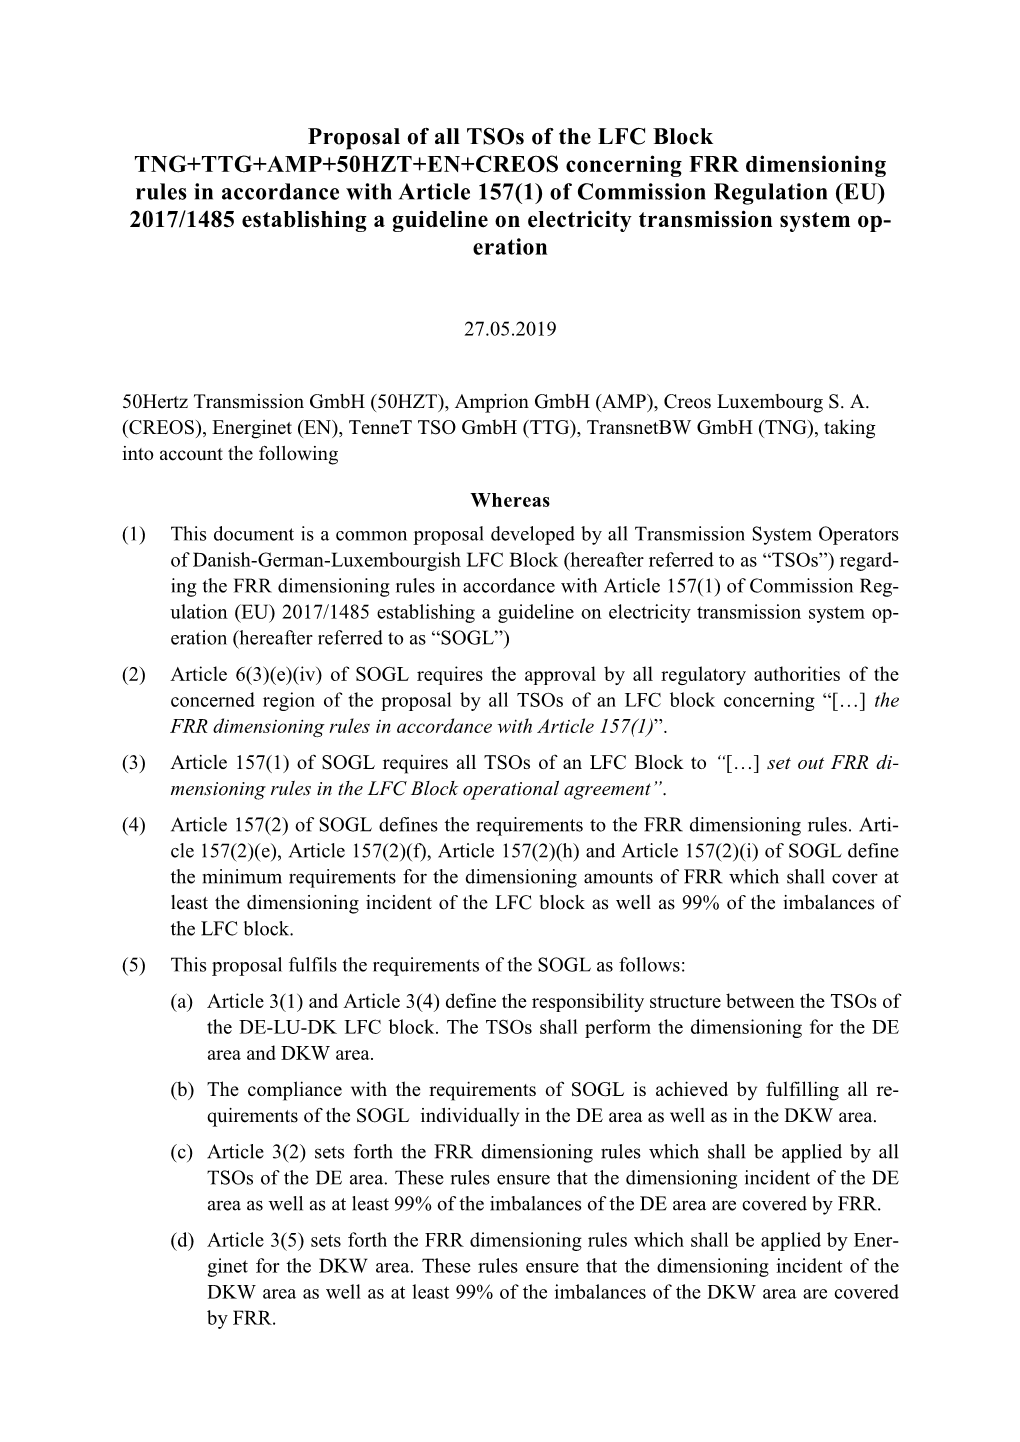 Proposal of All Tsos of the LFC Block TNG+TTG